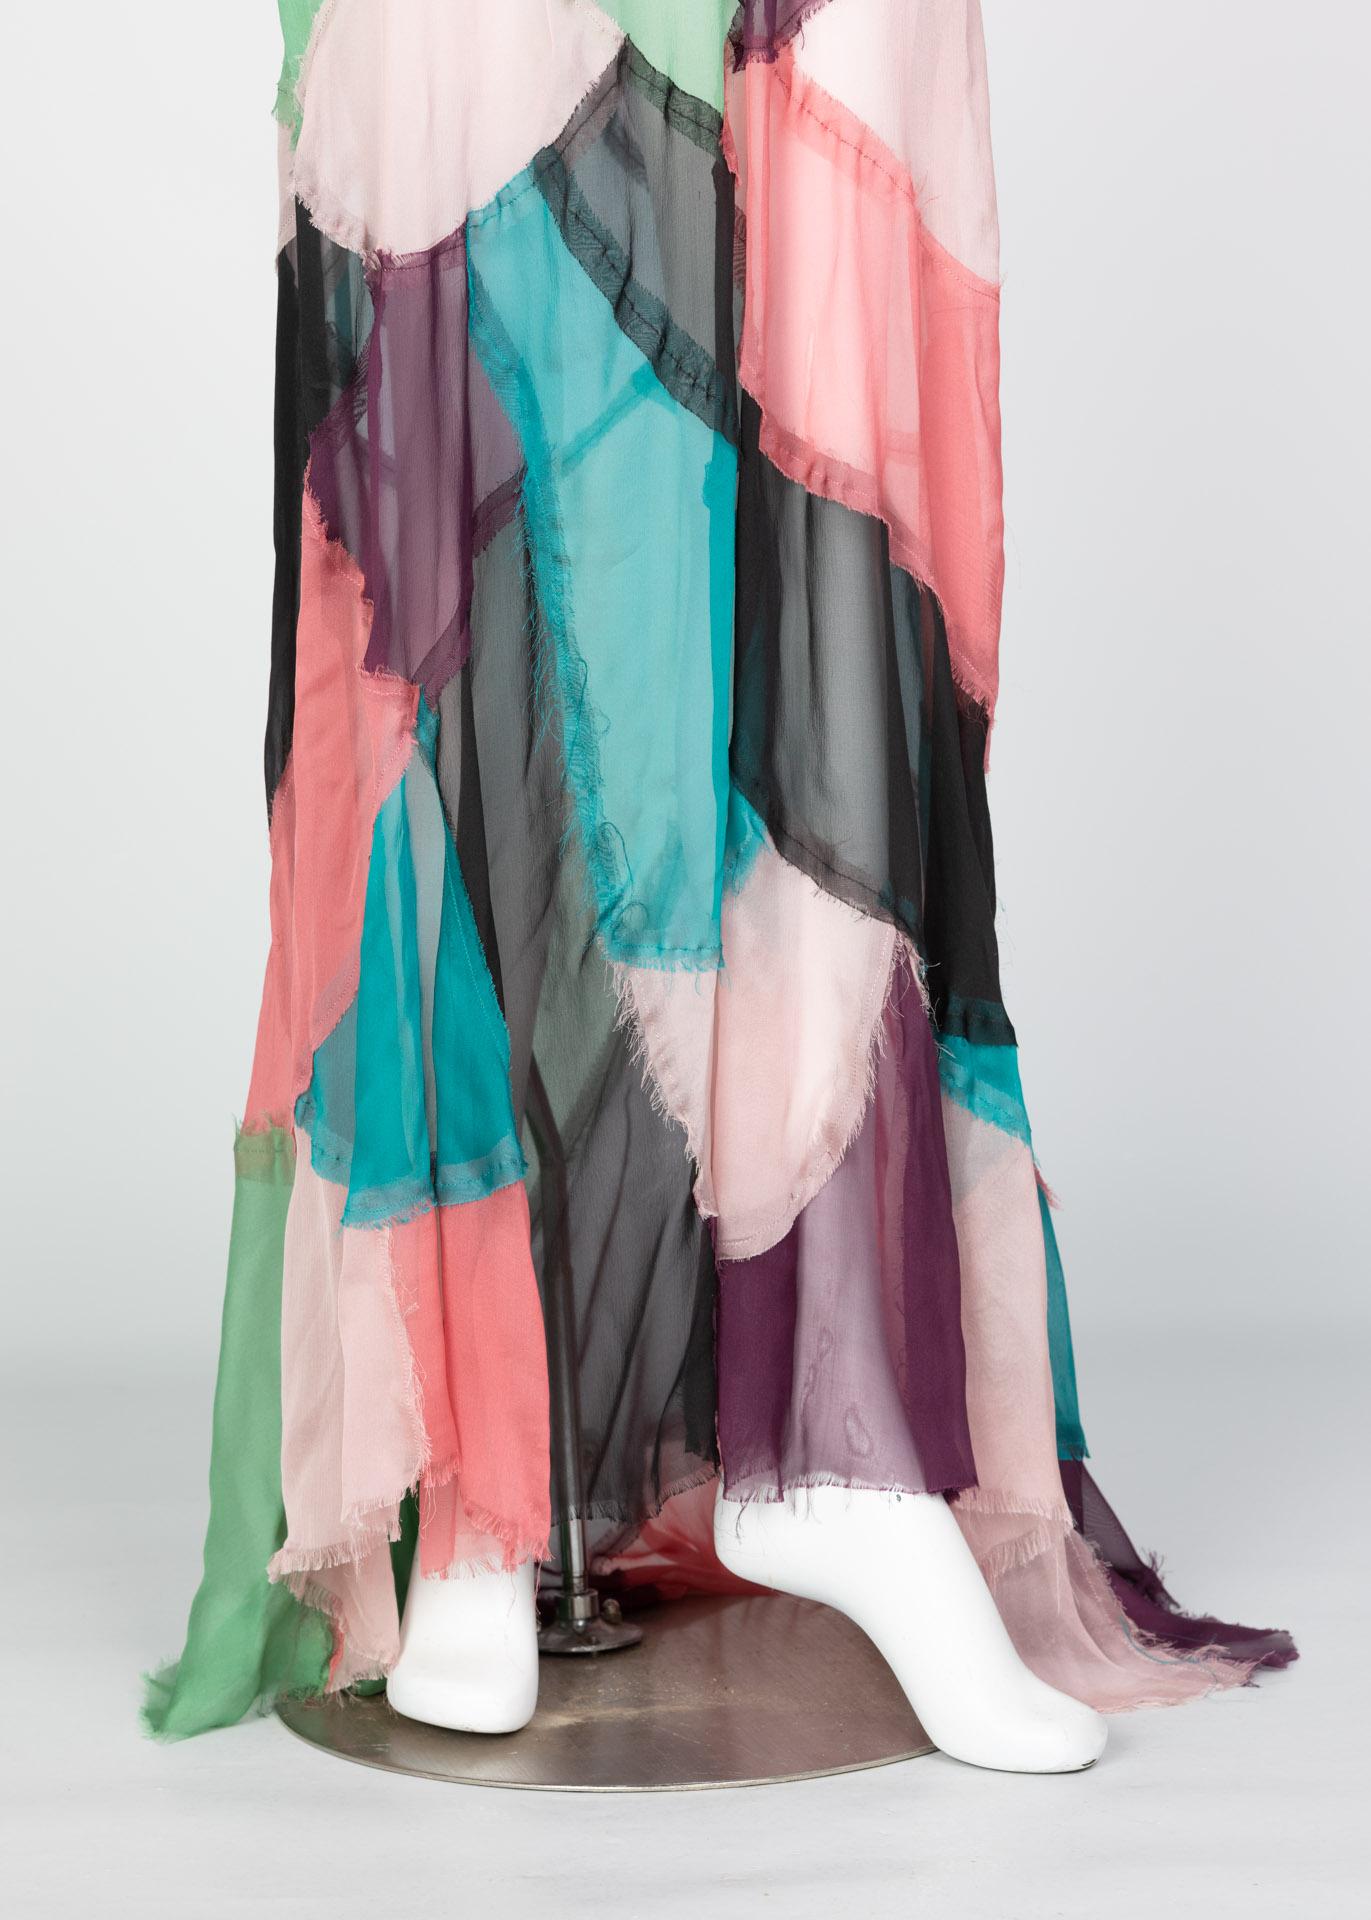 Alberta Ferretti Silk Chiffon Patchwork Open back Halter Gown, 2005 For Sale 5